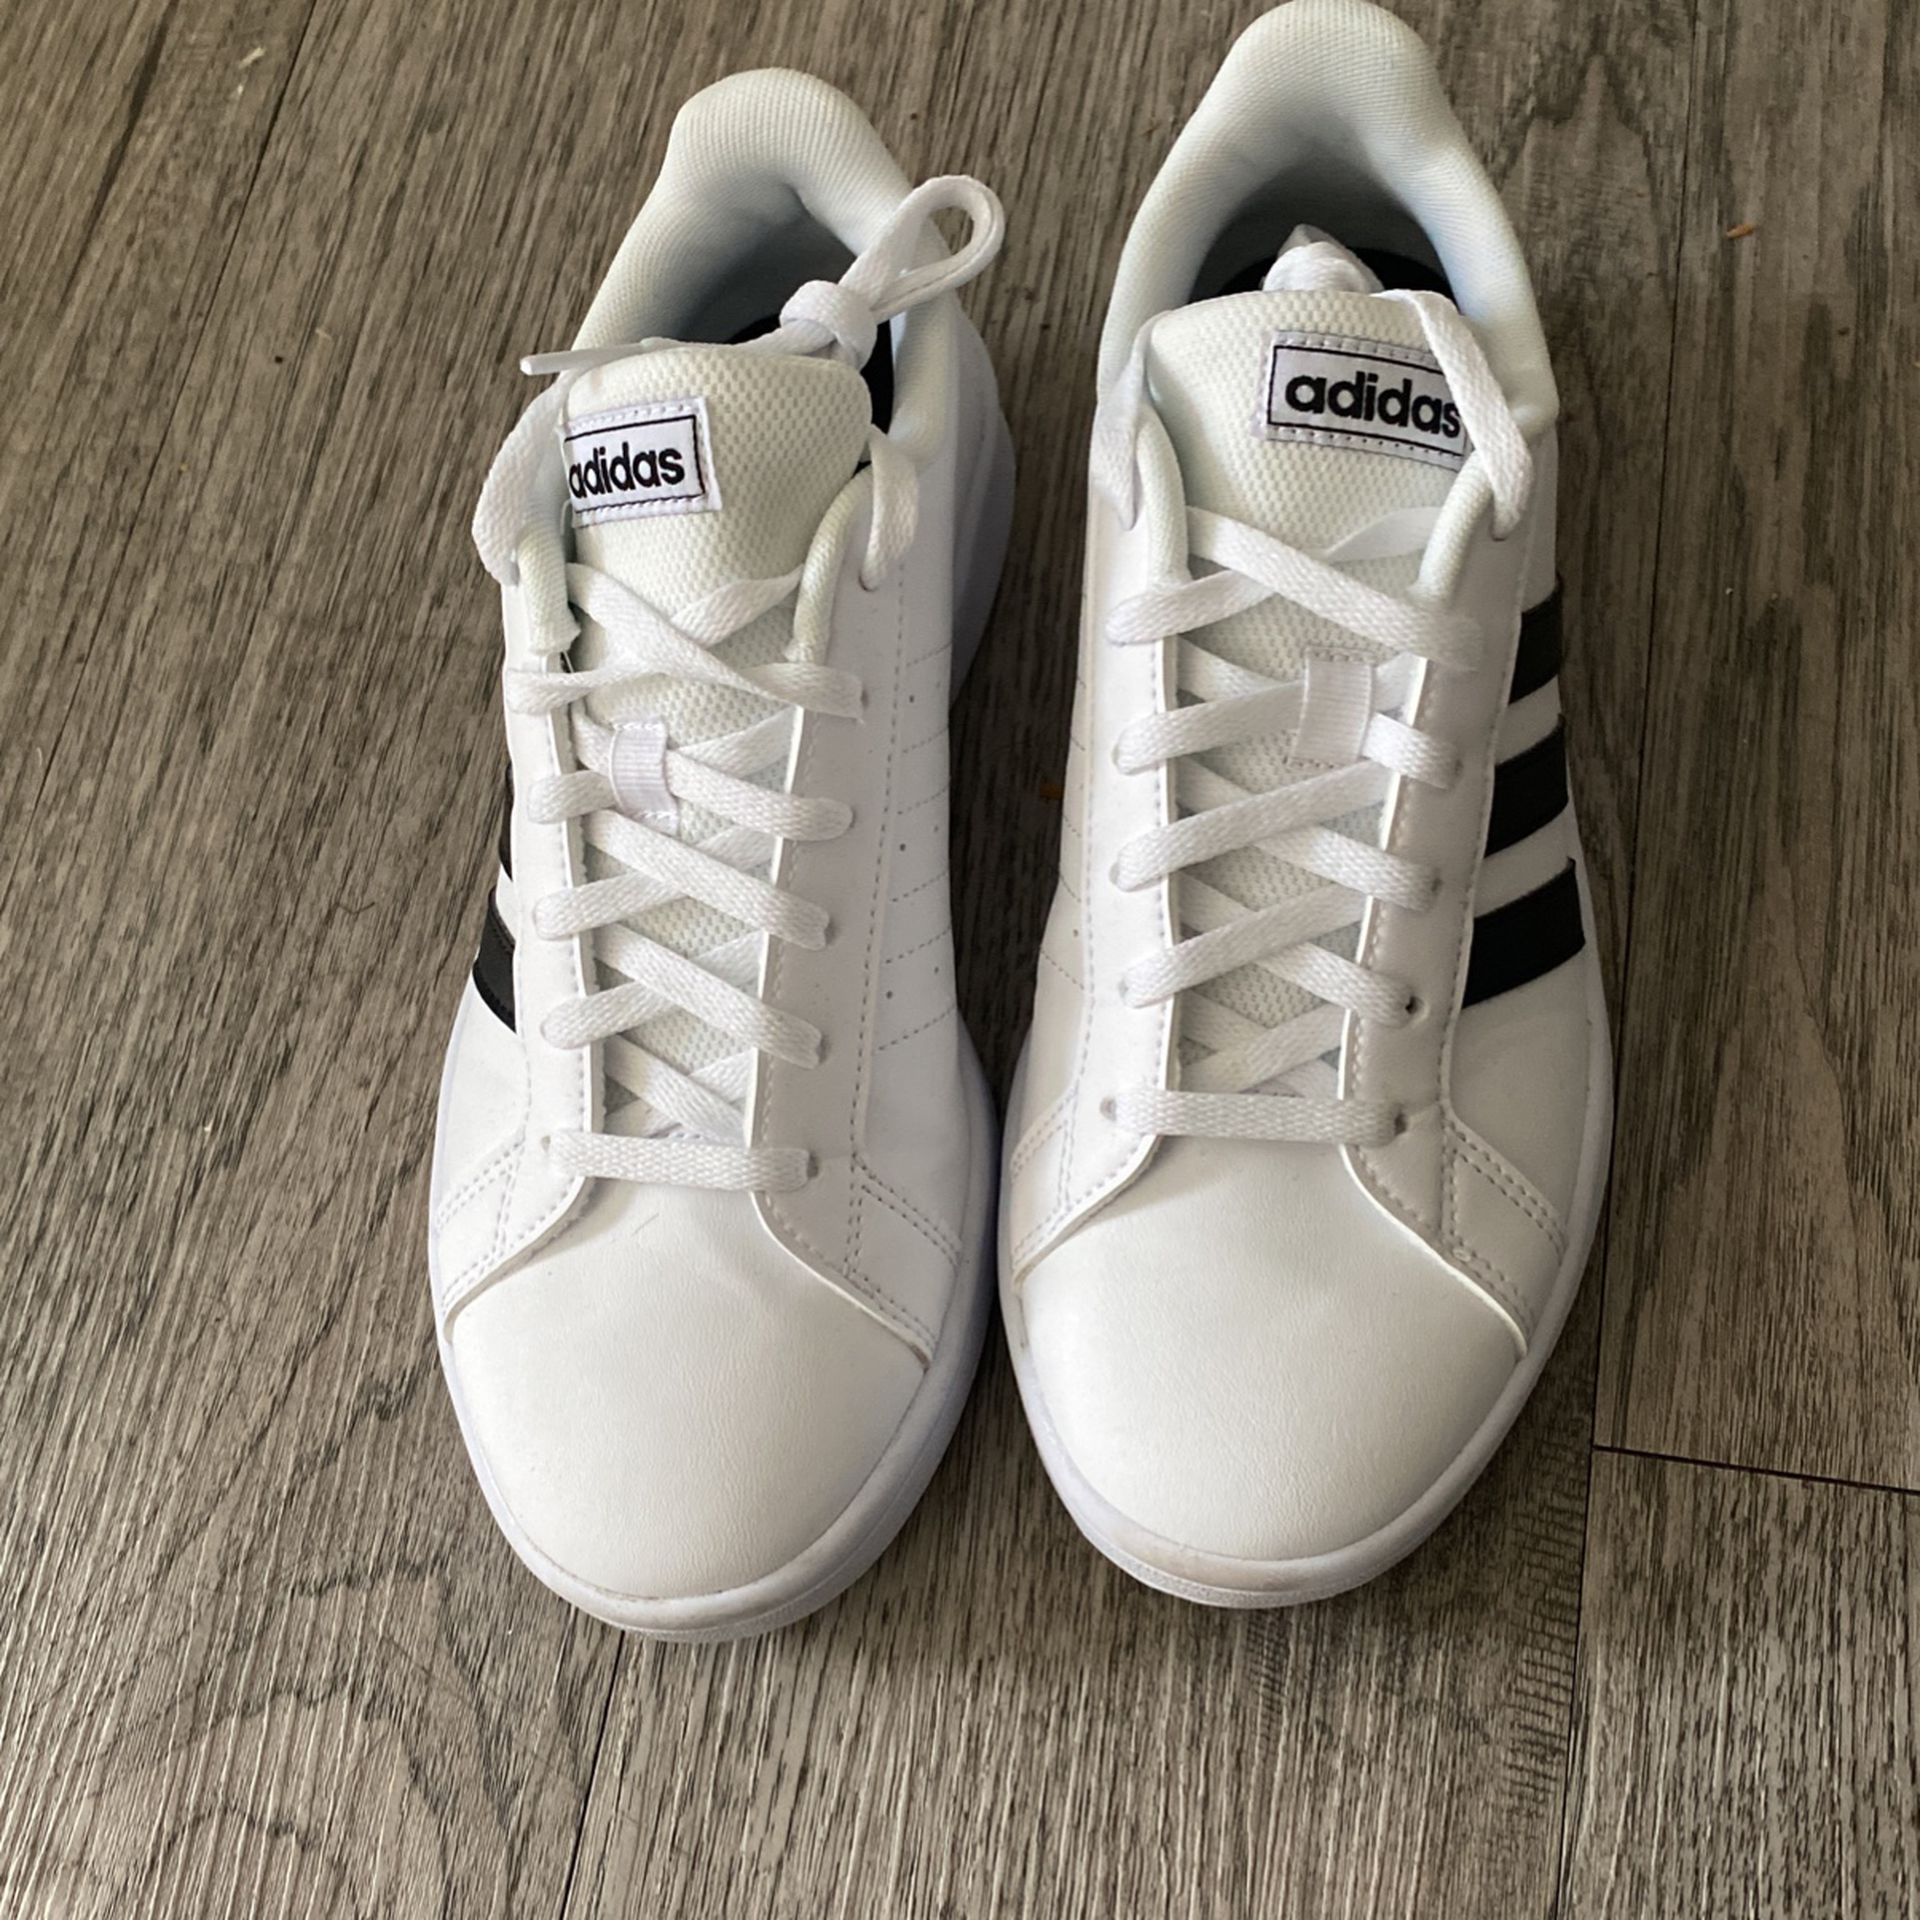 Adidas Shoes Size 6 